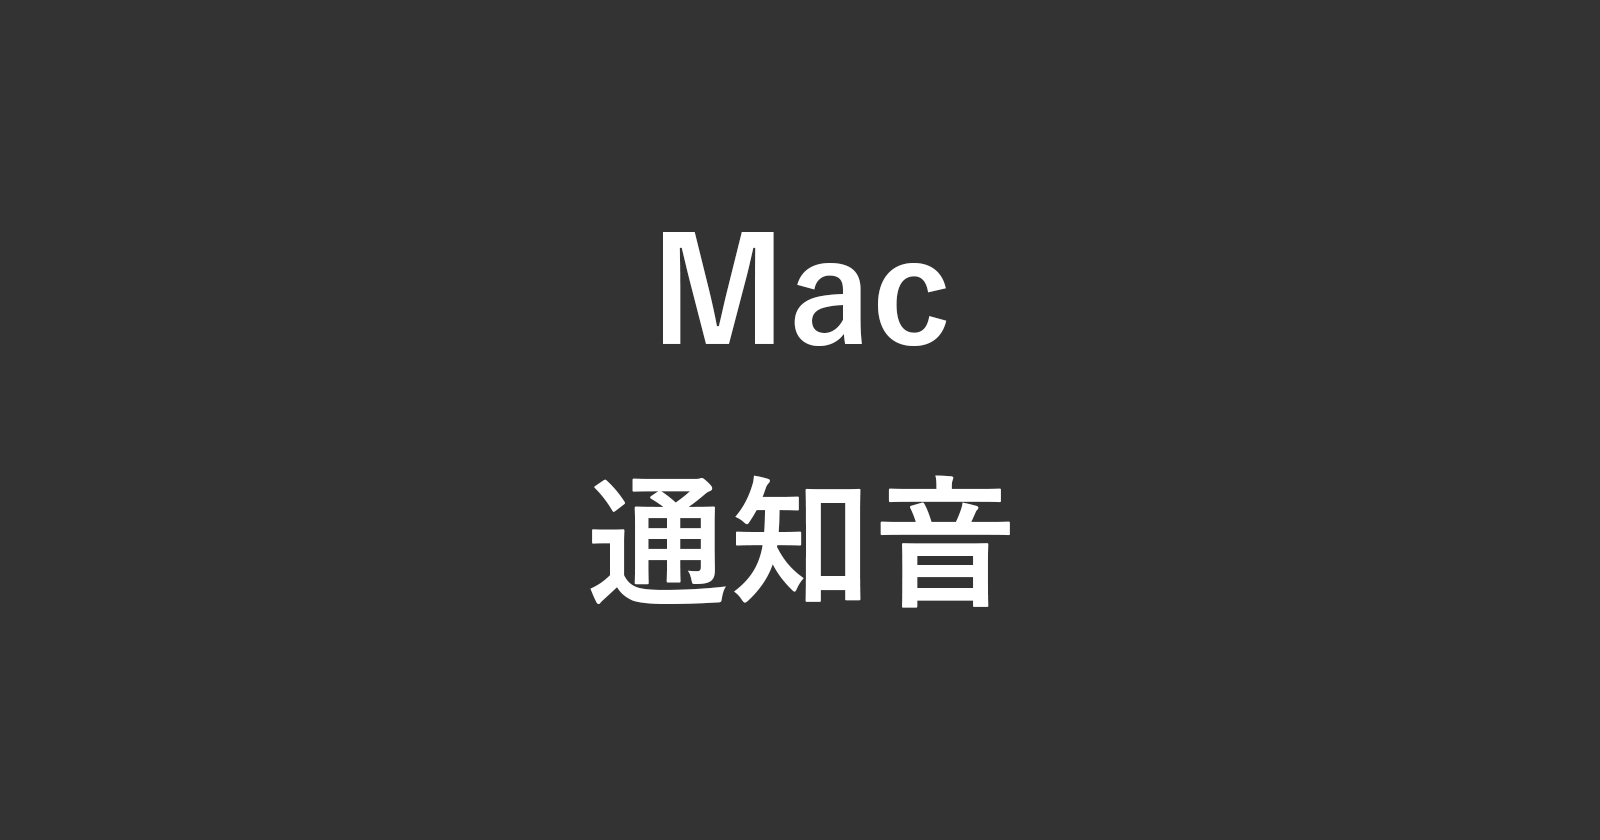 mac notification sound